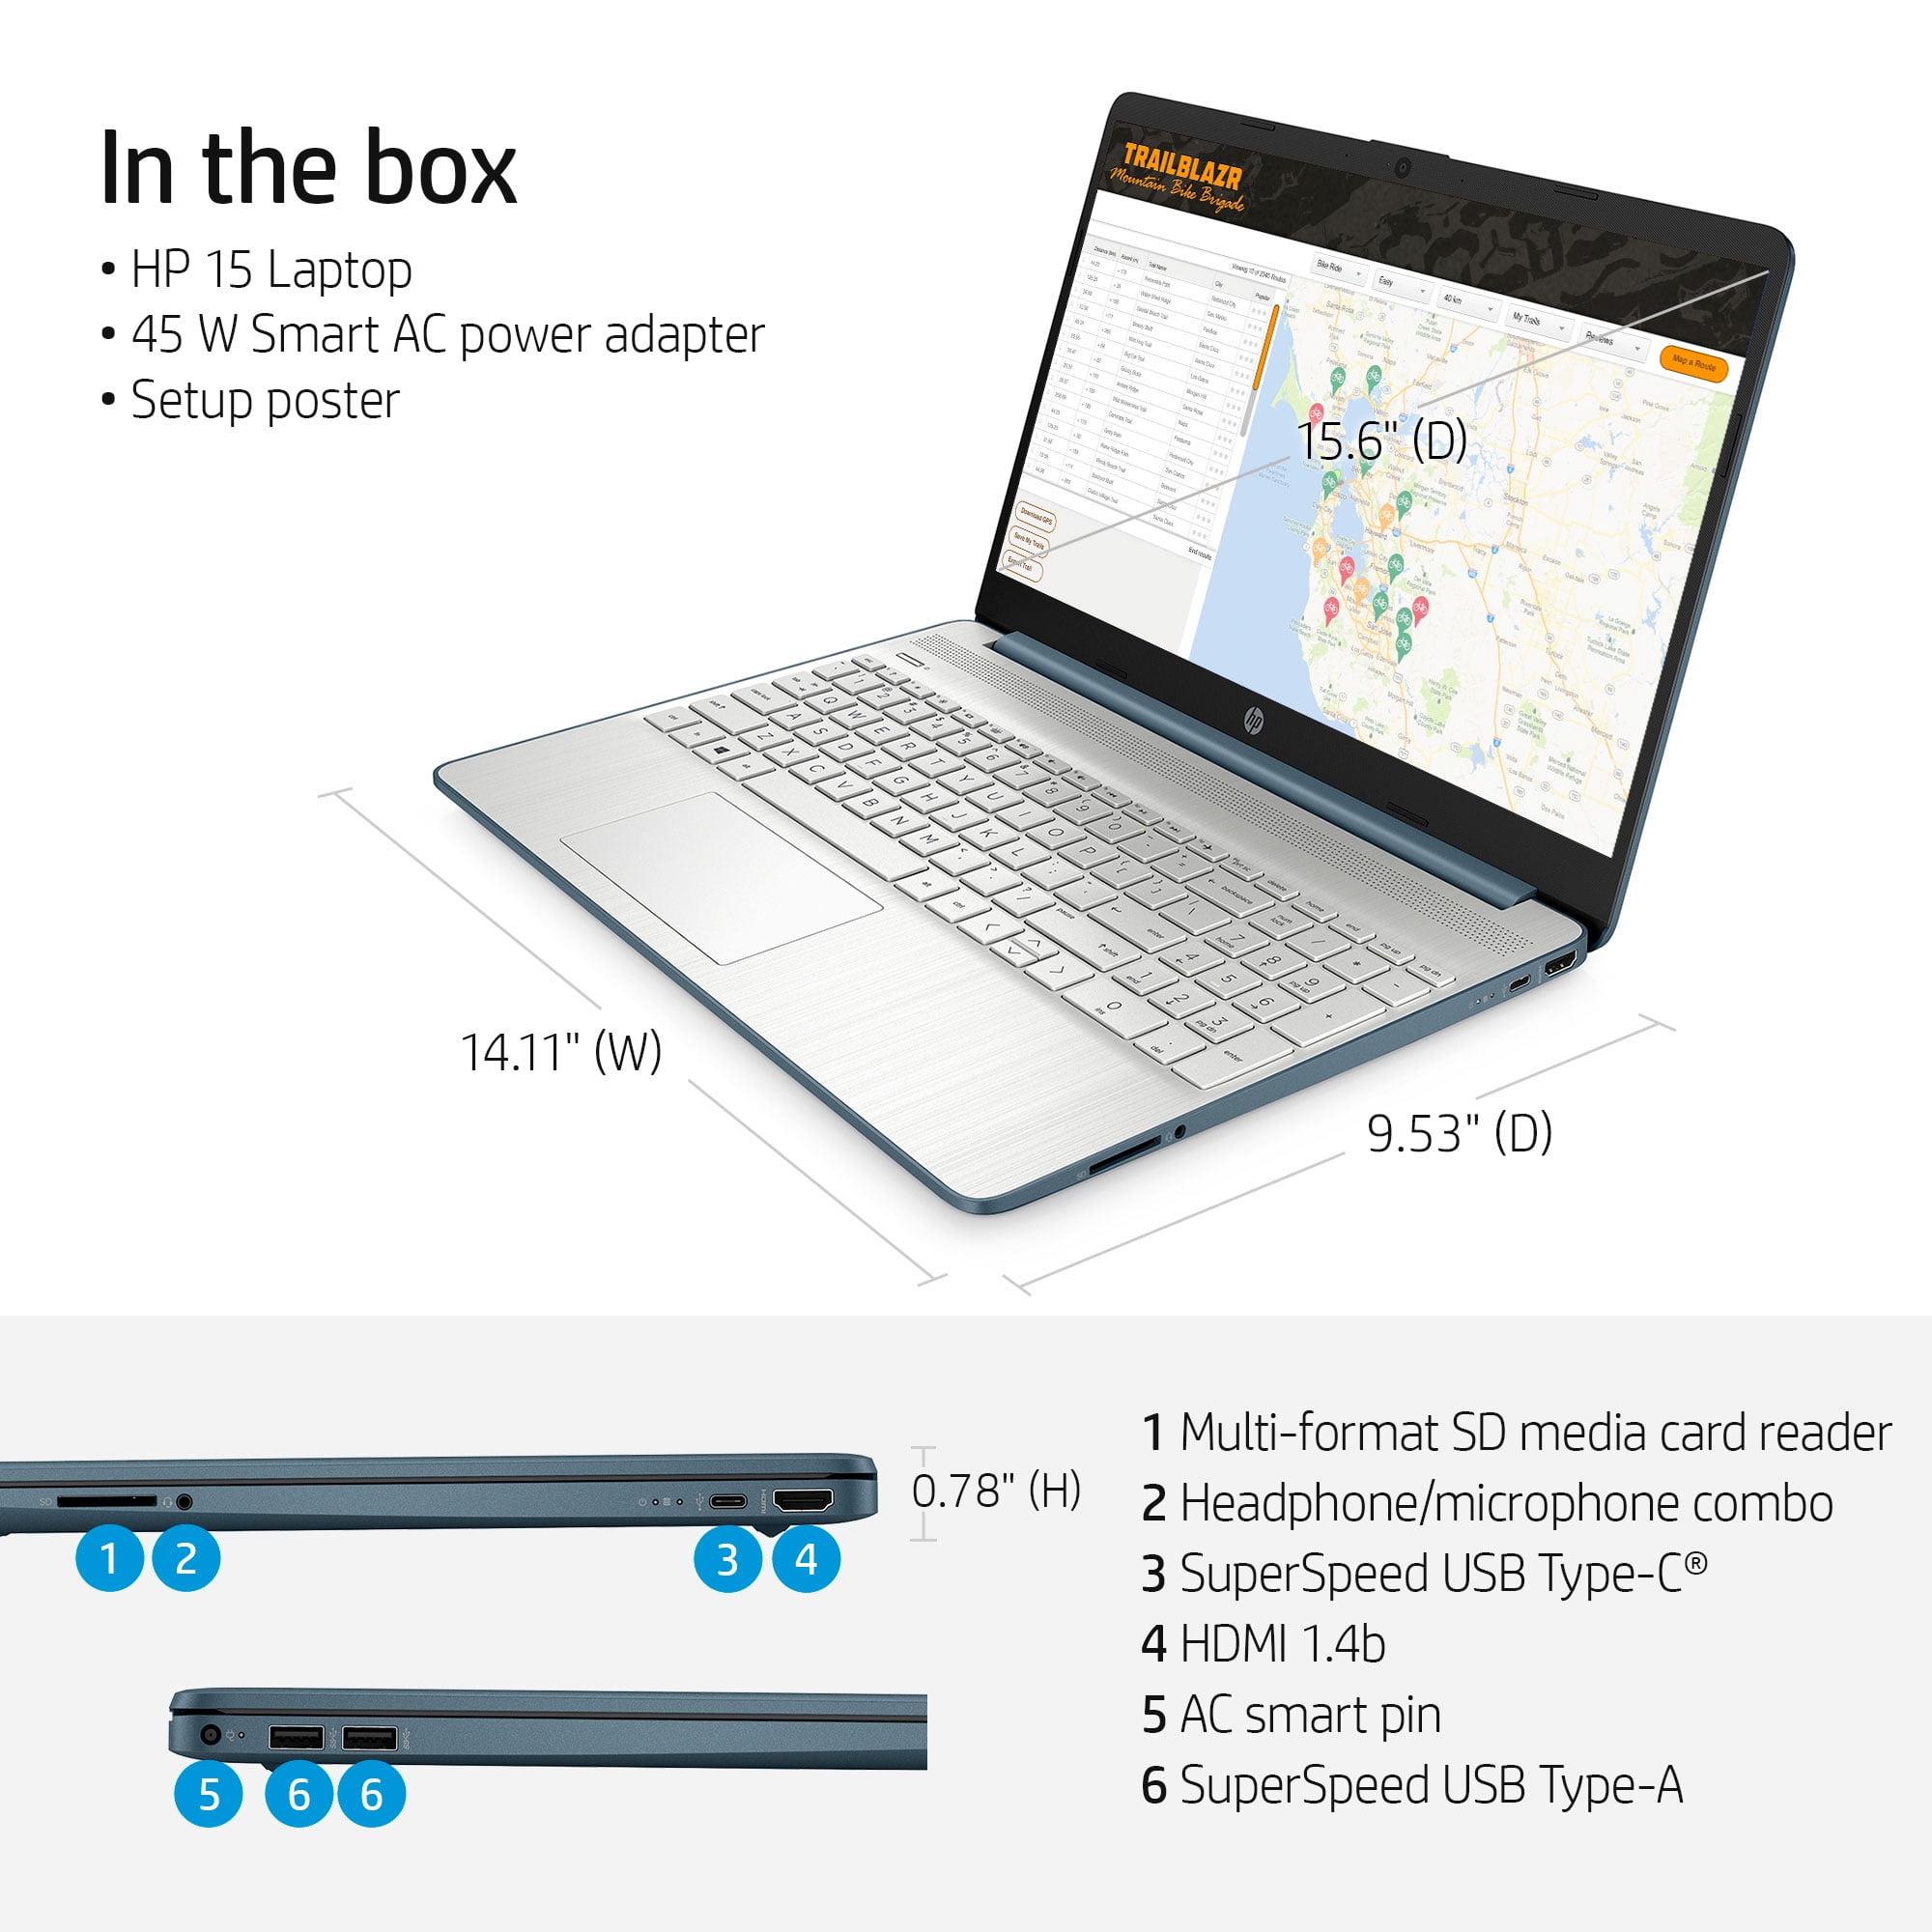 HP 15s-fy5006TU Laptop